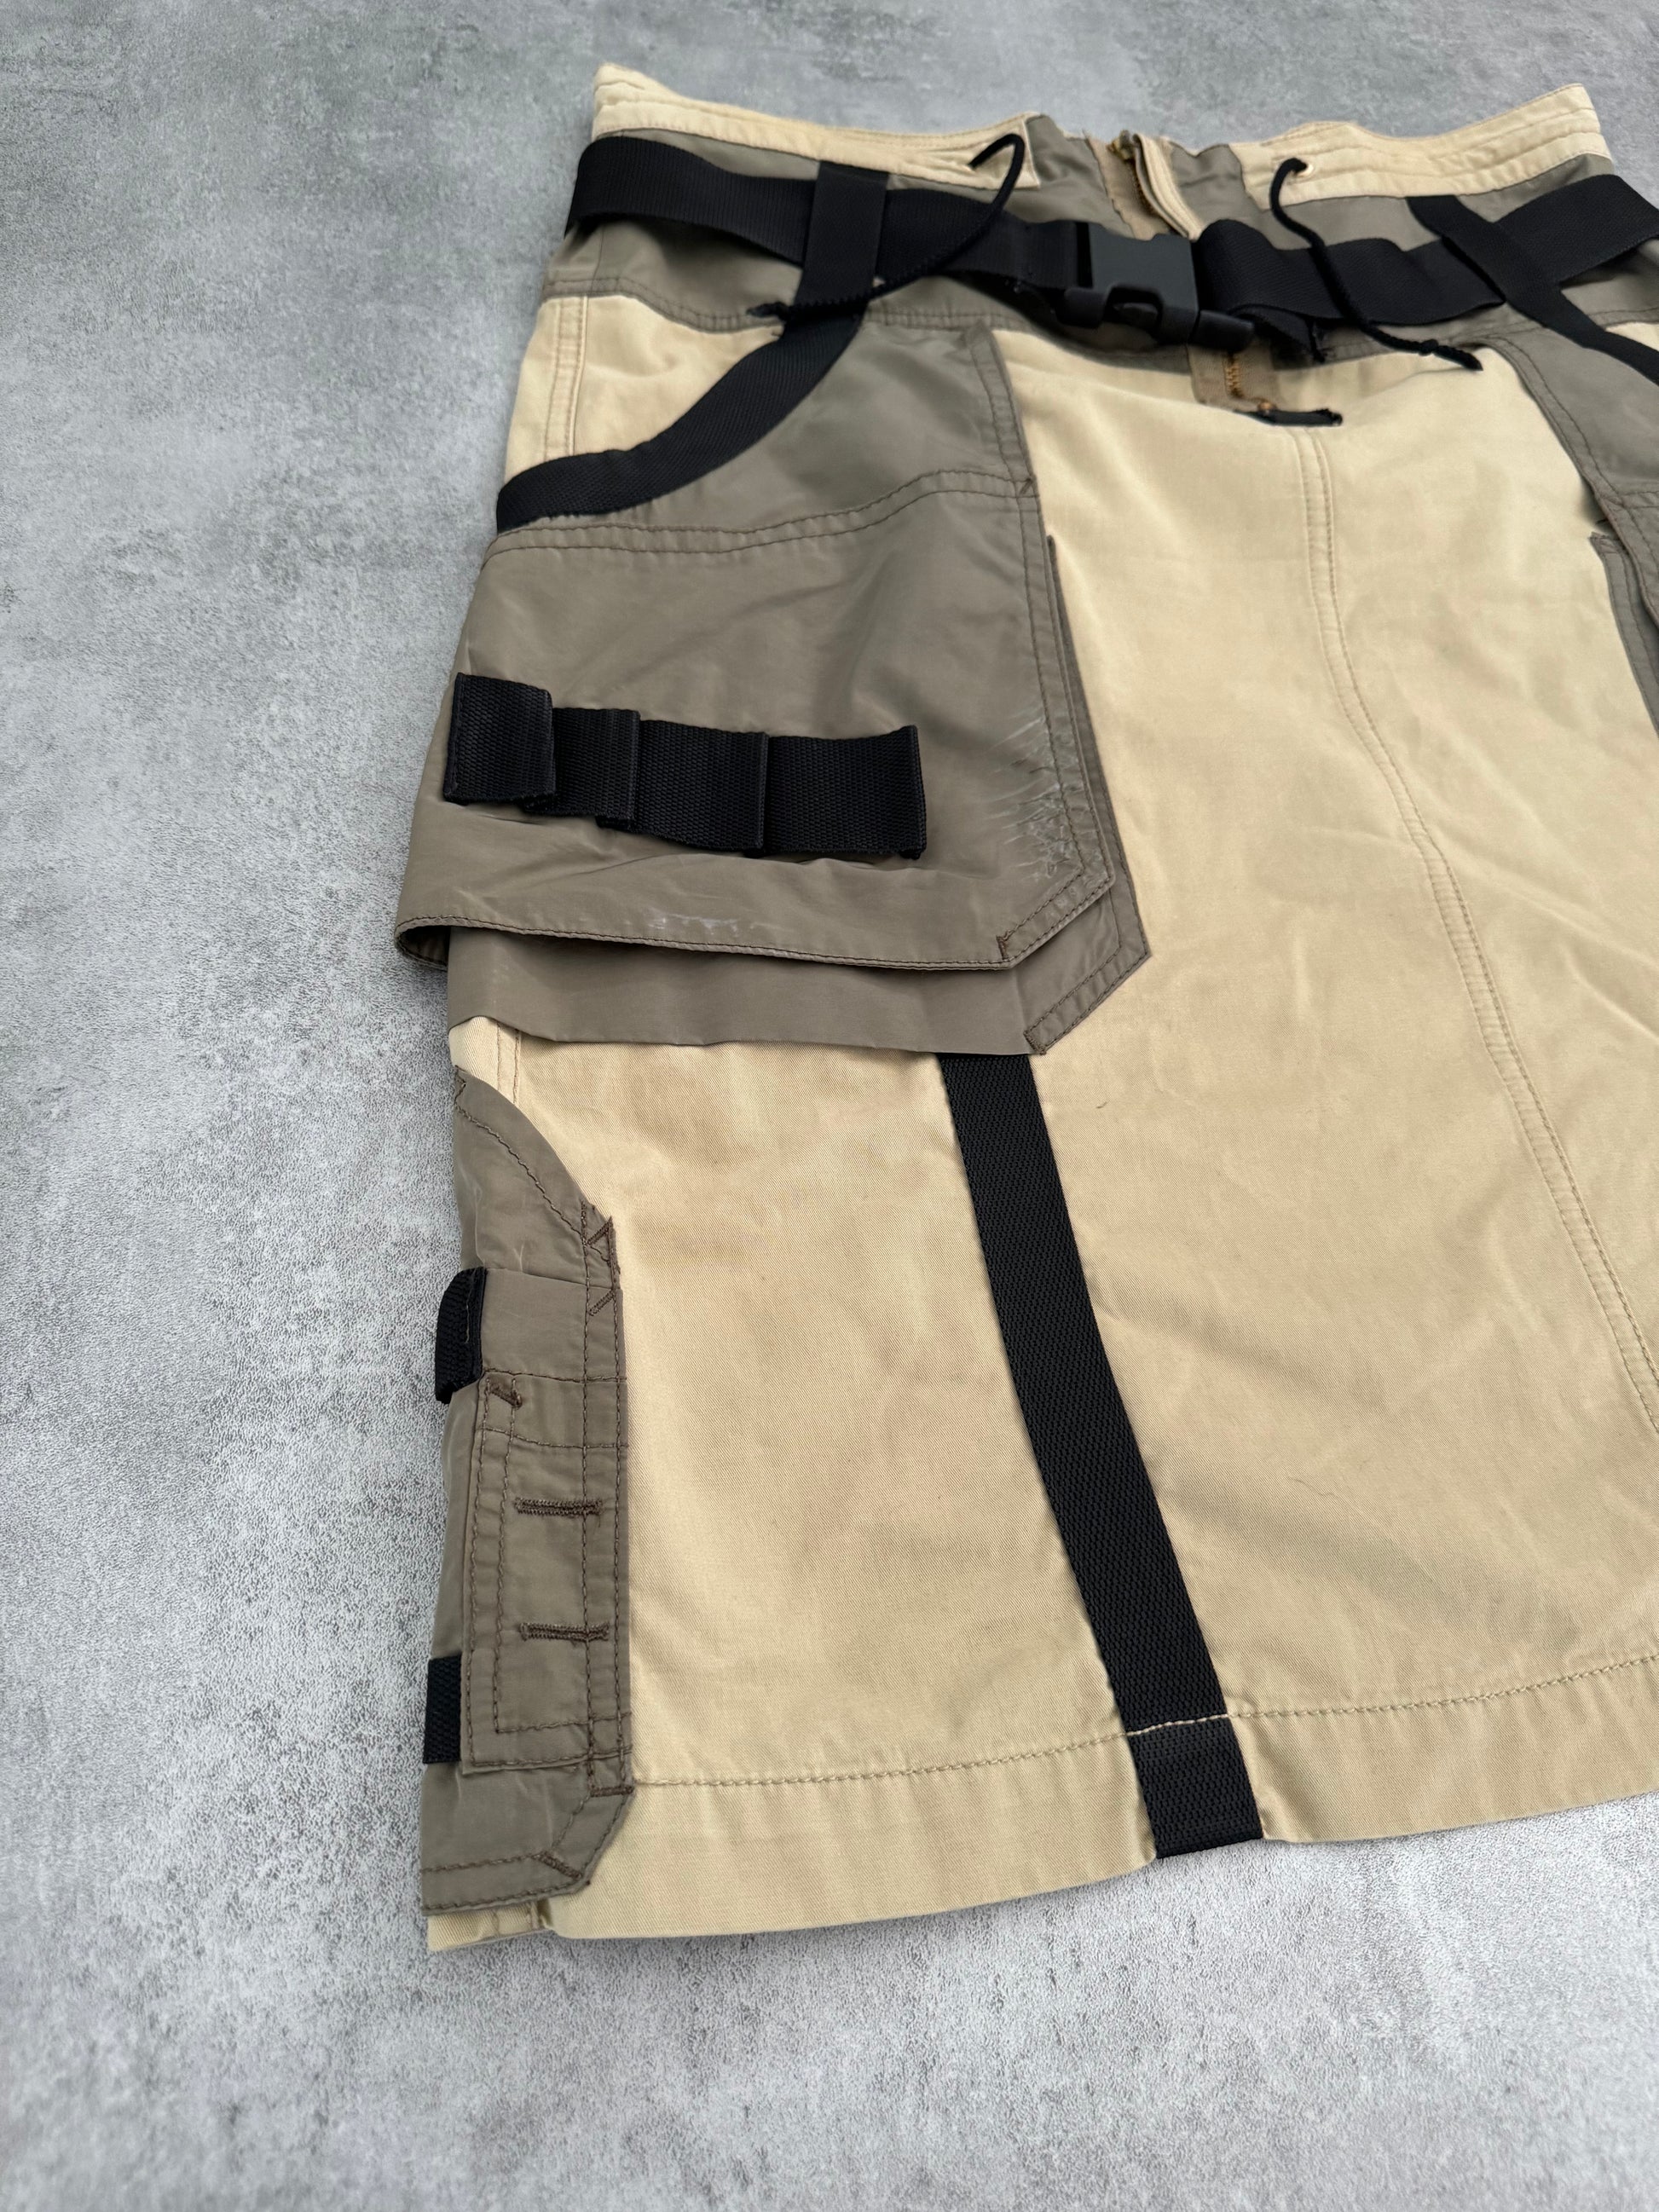 AW2003 Jean Paul Gaultier Bondage Skirt  (L) - 7